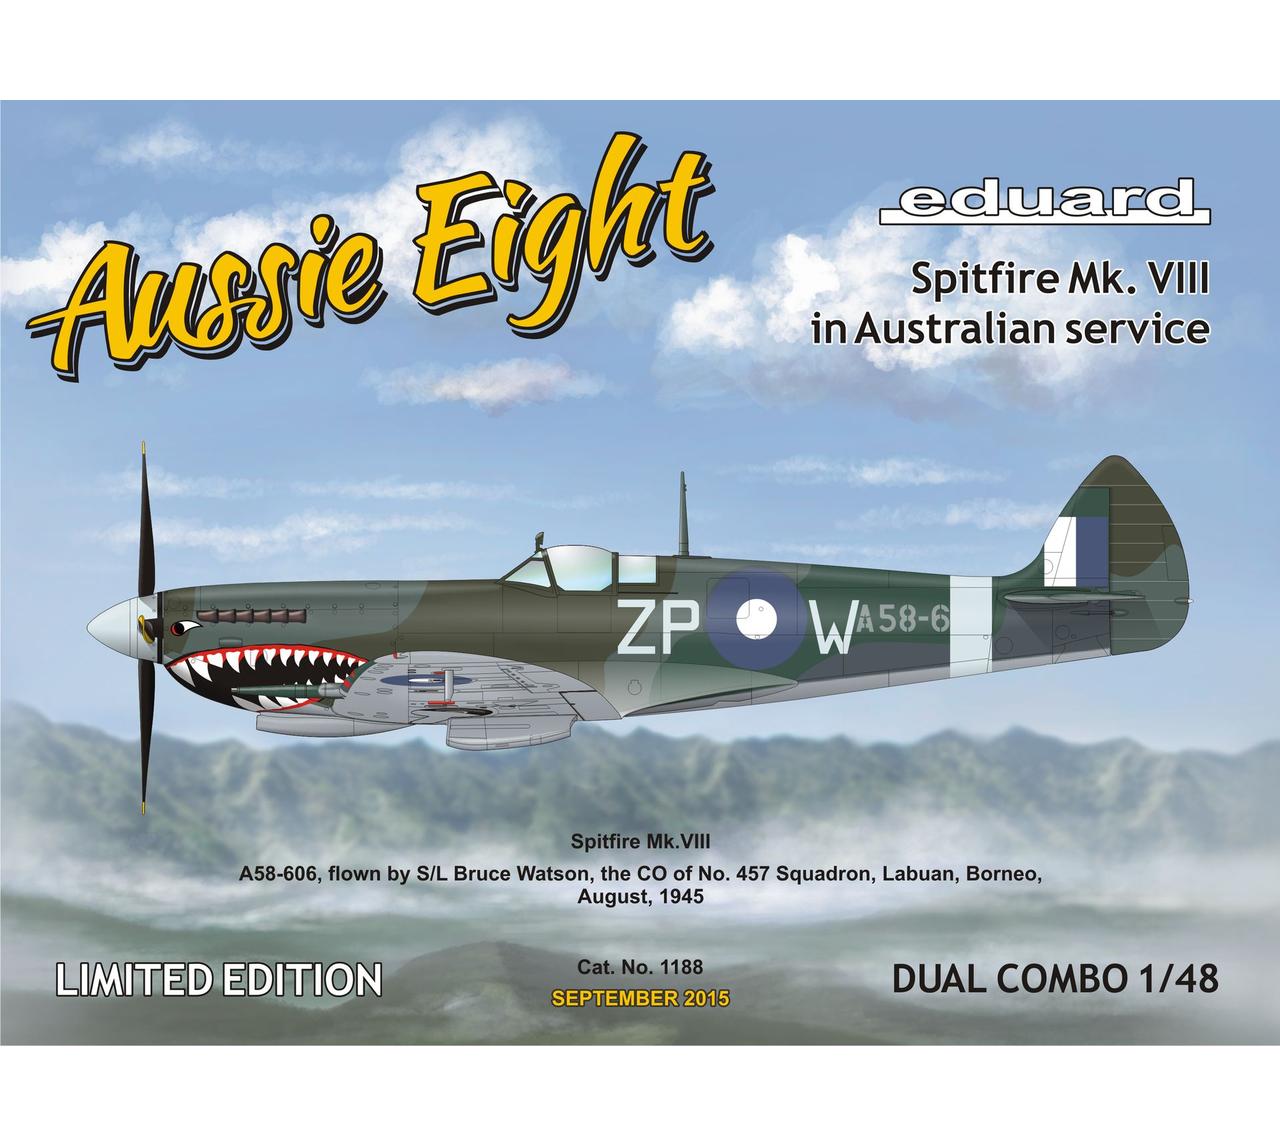 1 - Eduard Spitfire-kavalkad, Aussie Eight #1 klar, Aussie Eight #2 NY!, Bonus: Airfix Spitfire XII - Sida 12 10